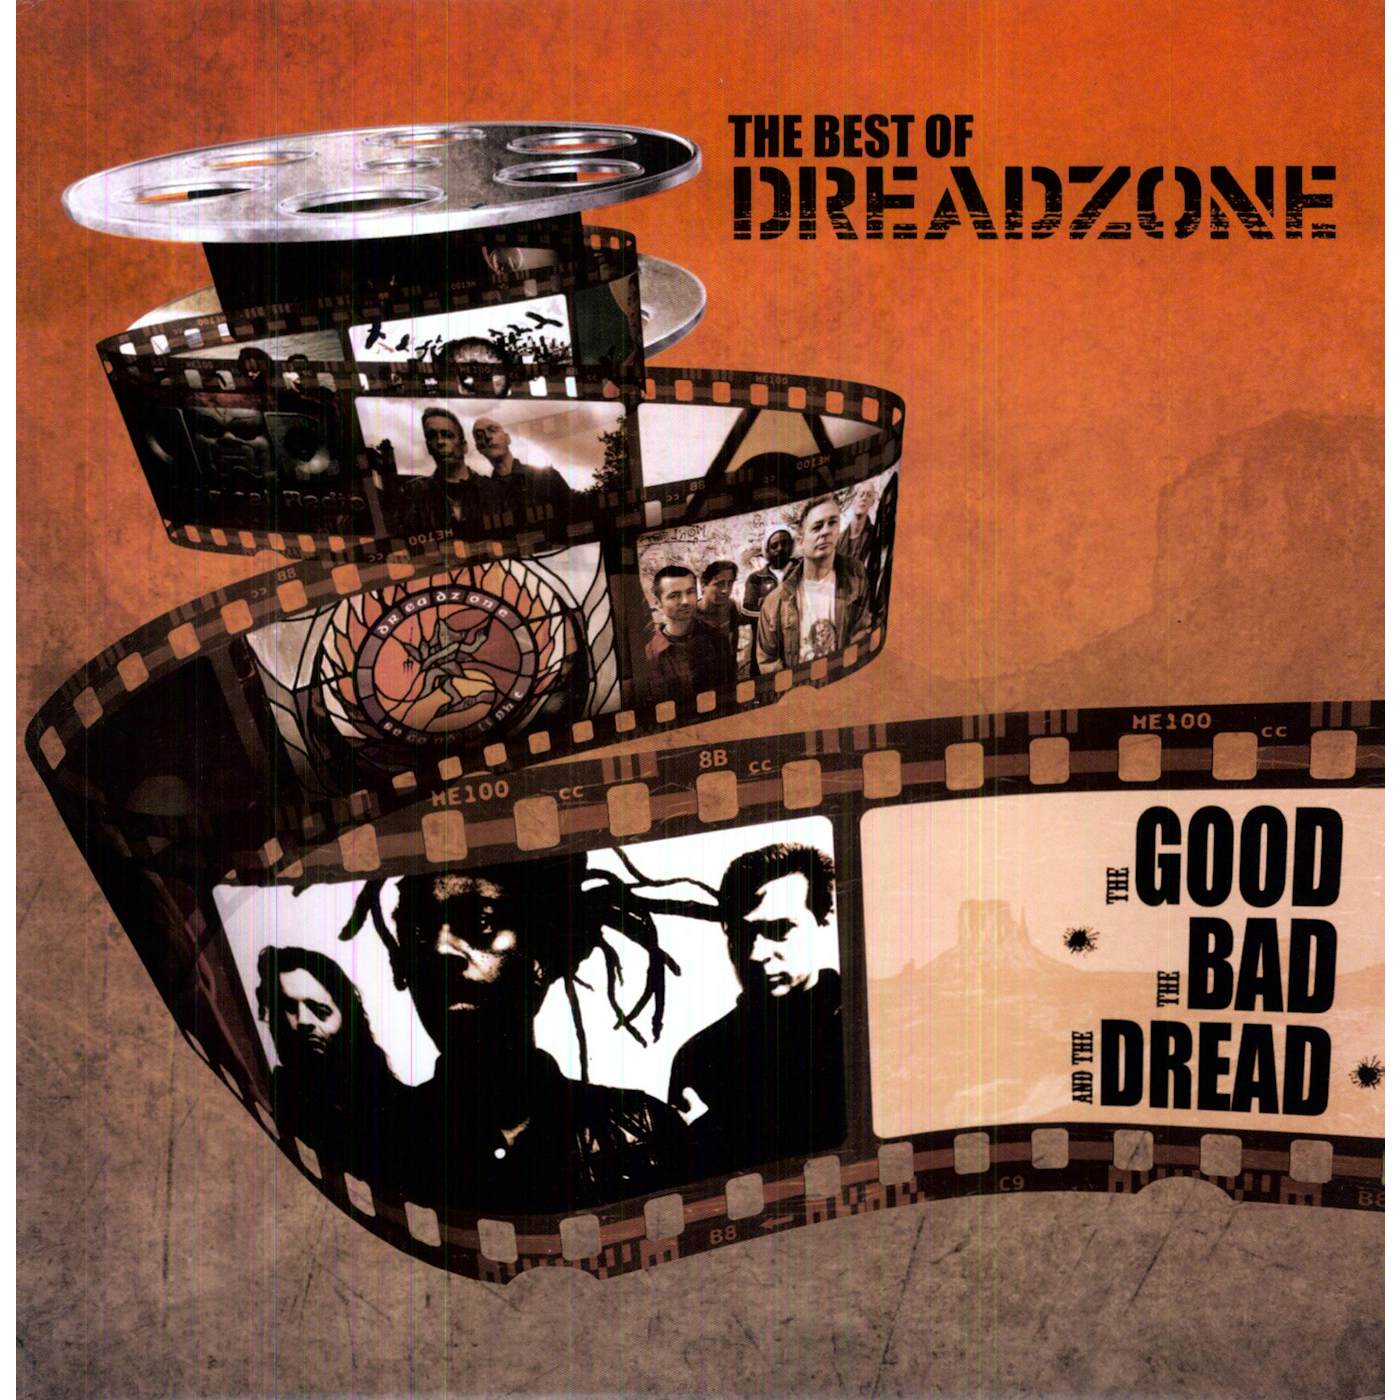 Dreadzone BEST OF: GOOD THE BAD & THE DREAD Vinyl Record - 180 Gram Pressing